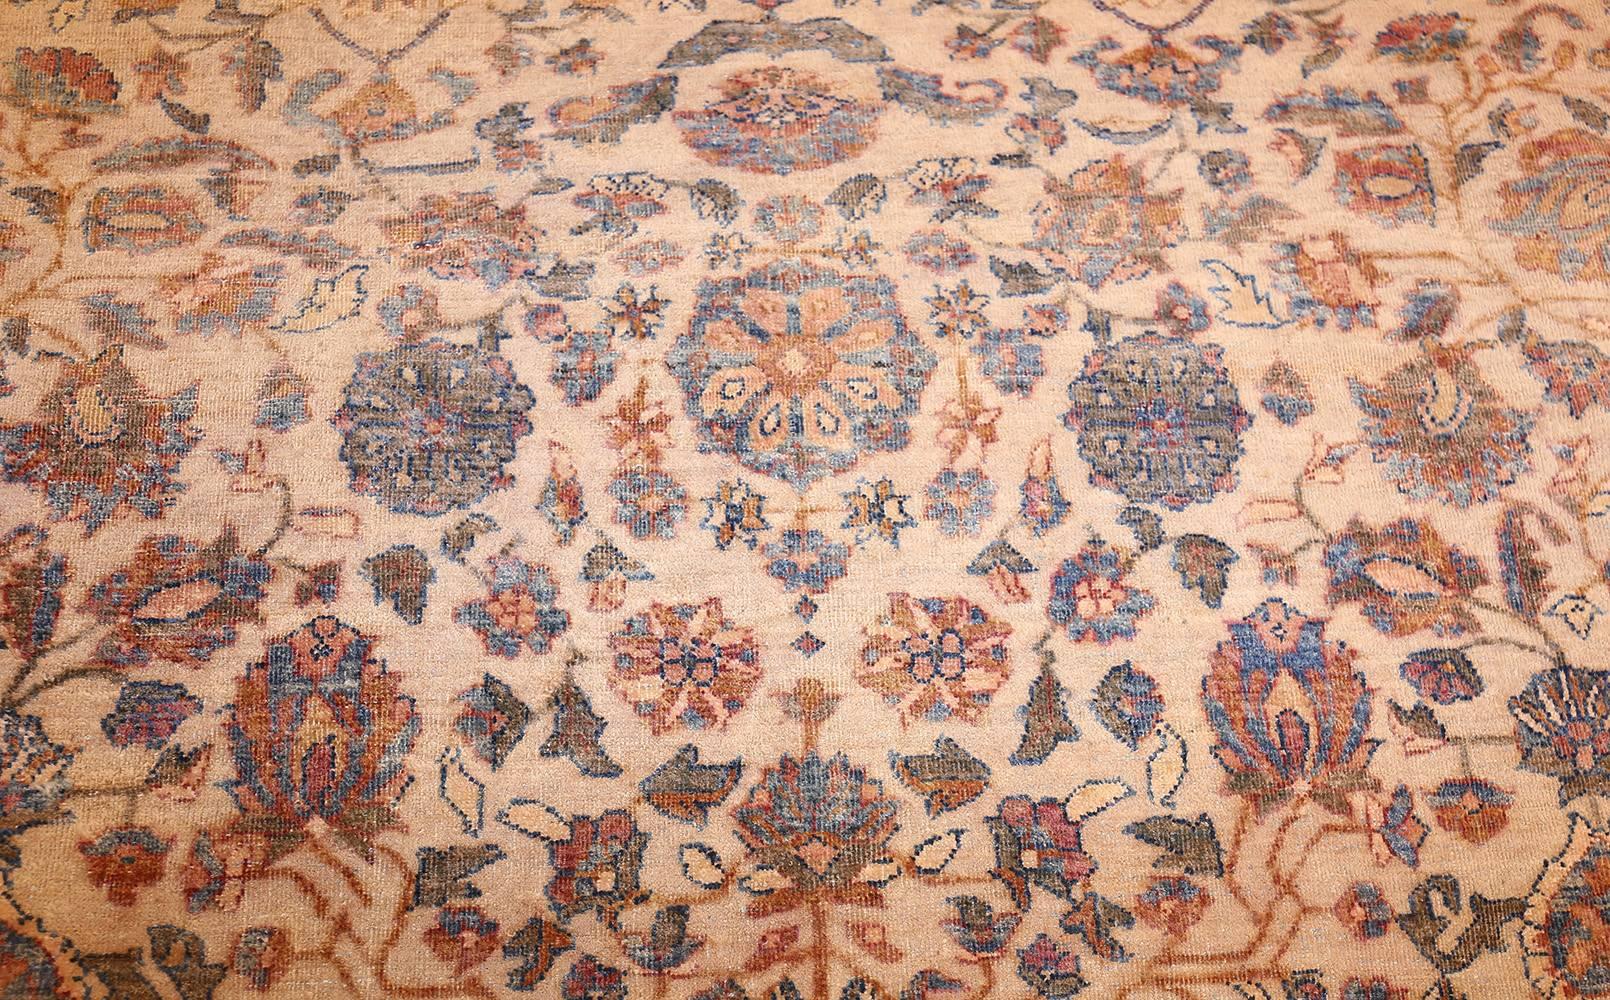 20th Century Decorative and Rare Square Size Persian Antique Tabriz Rug. Size: 14' x 14' 6